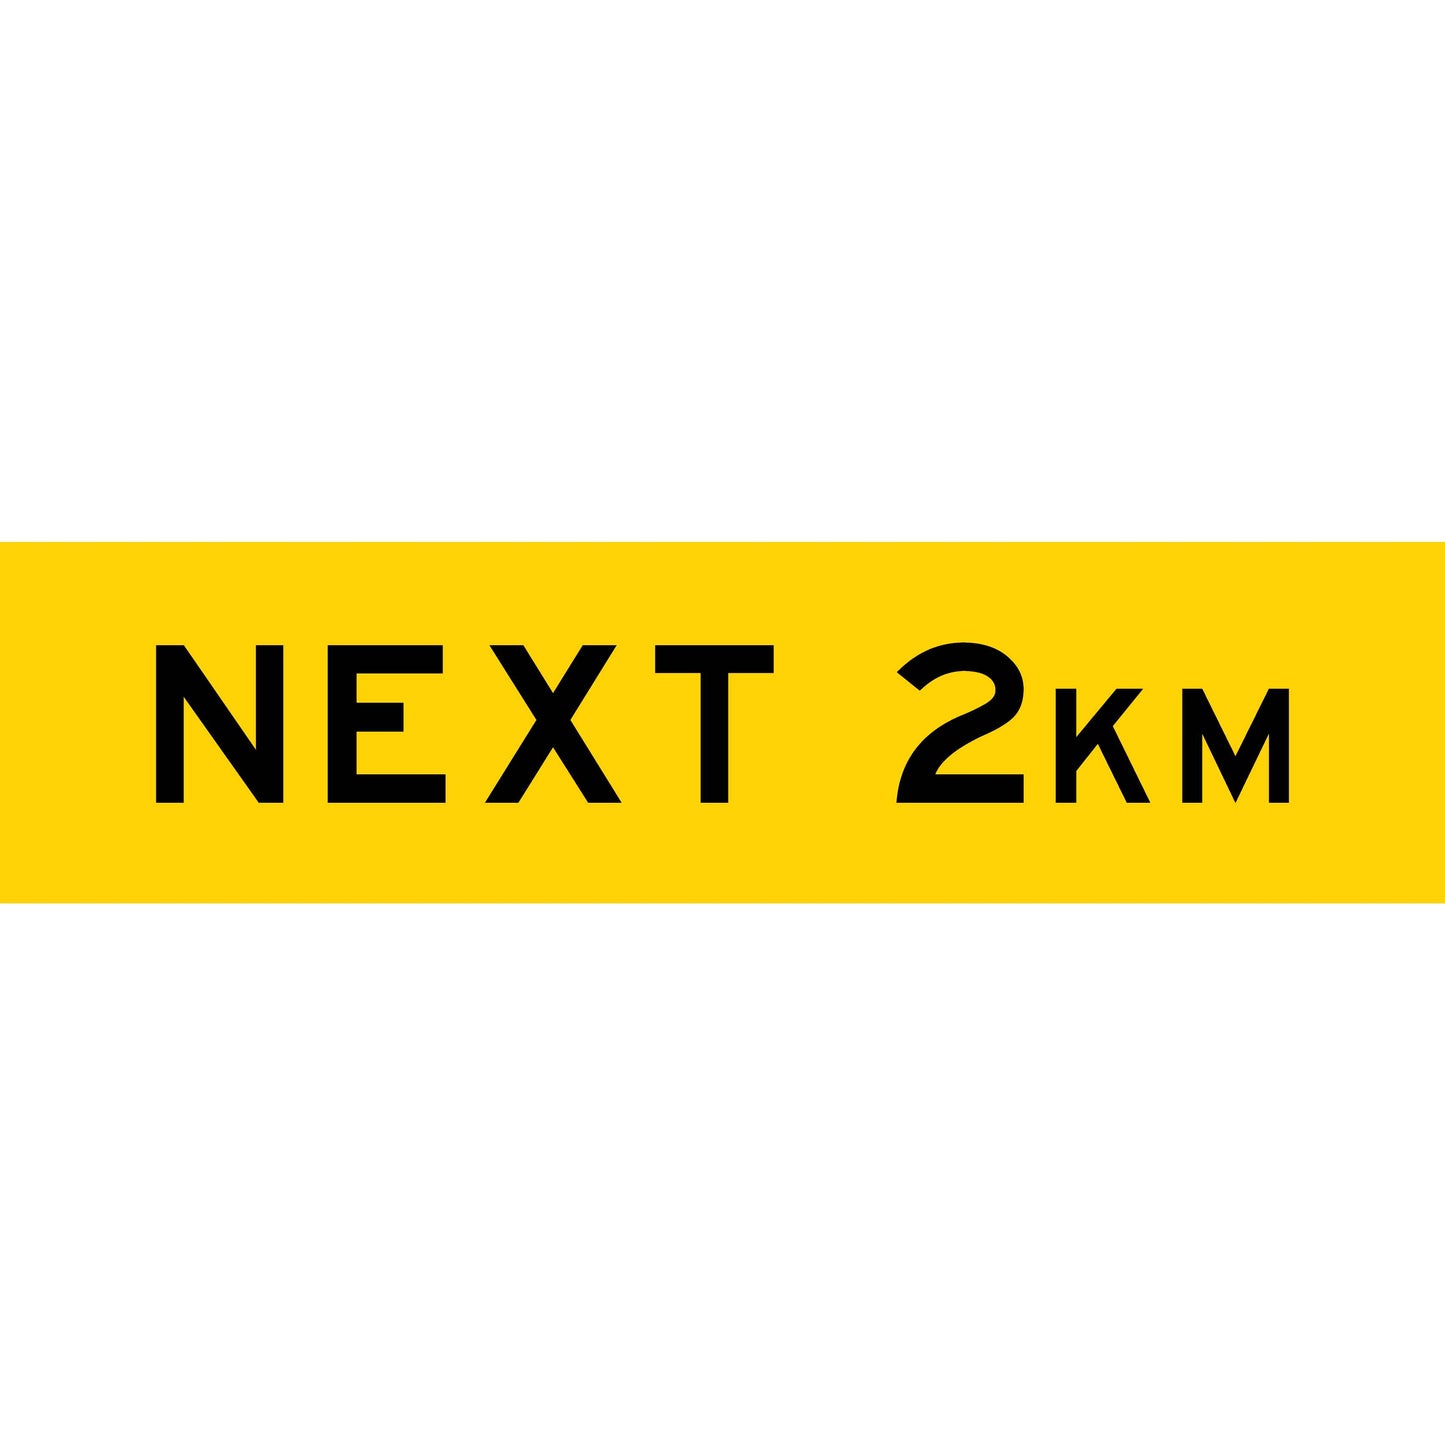 Next 2km Long Skinny Multi Message Reflective Traffic Sign